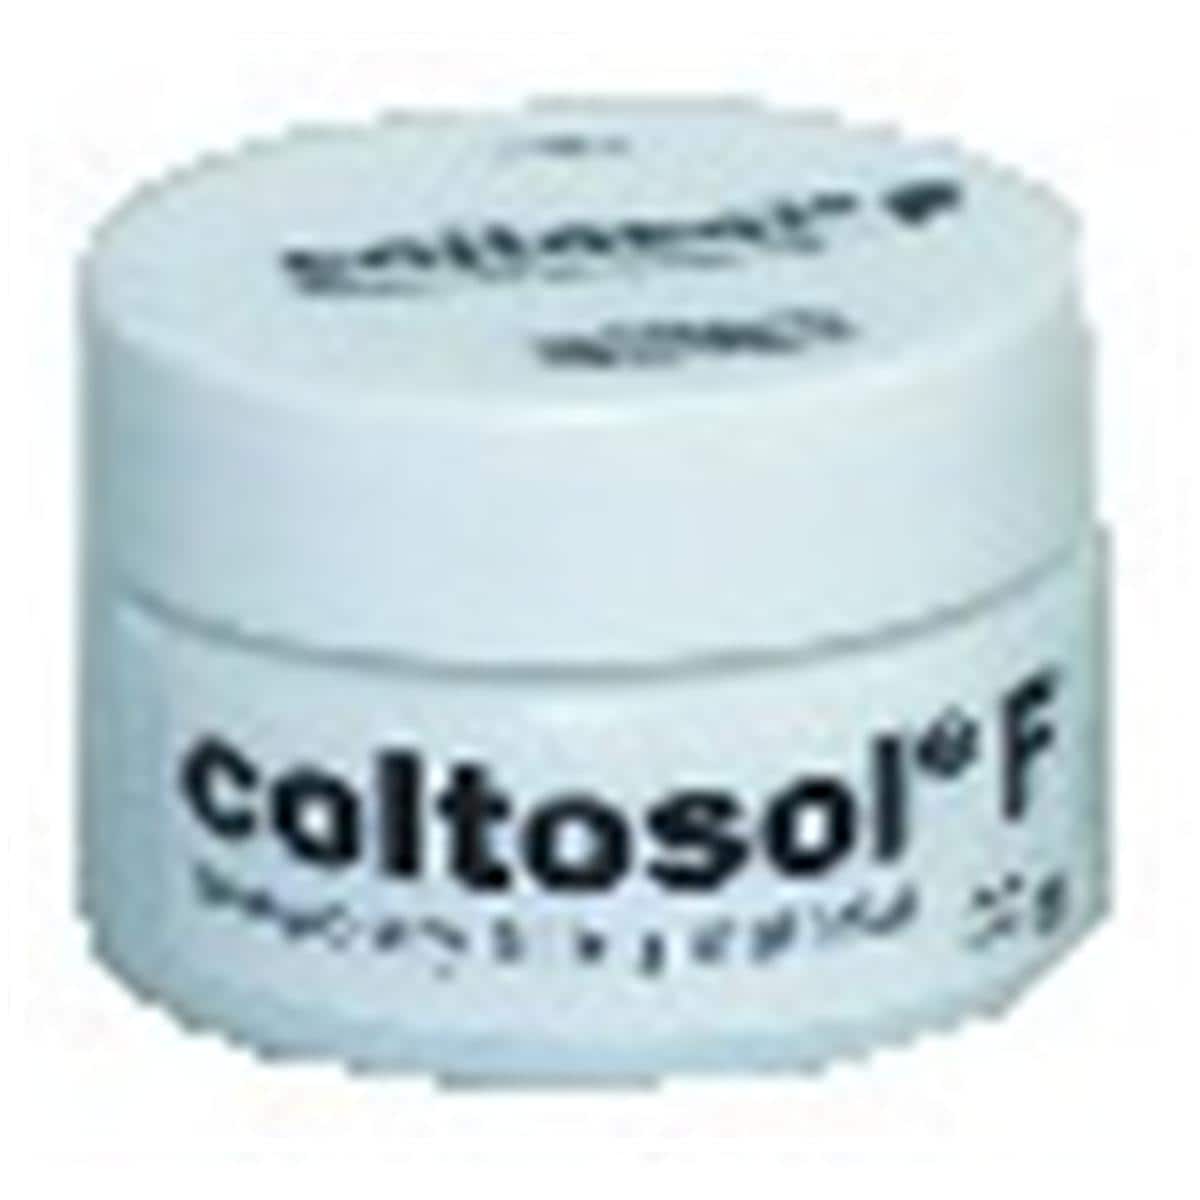 Coltosol F COLTENE - Pot de 38g